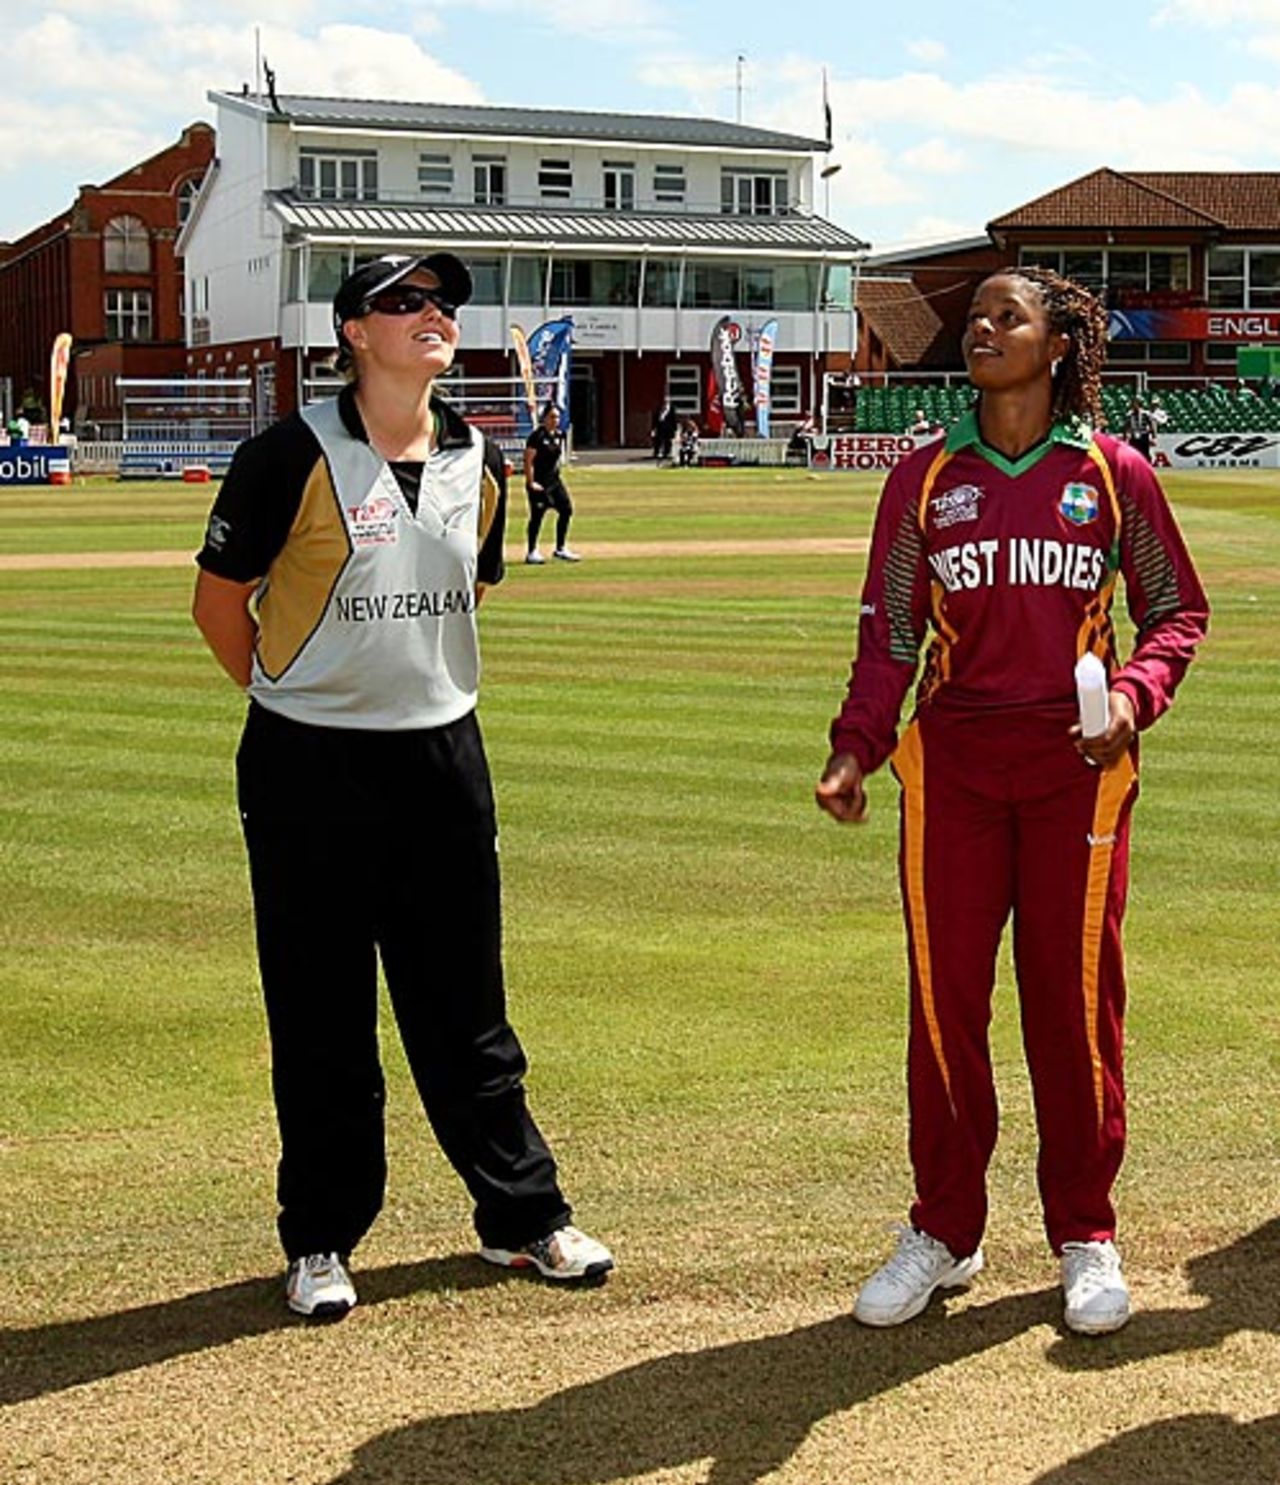 Aimee Watkins looks on as Merissa Aguilleira flips the coin, New Zealand v West Indies, ICC Women's World Twenty20, Taunton, June 13, 2009